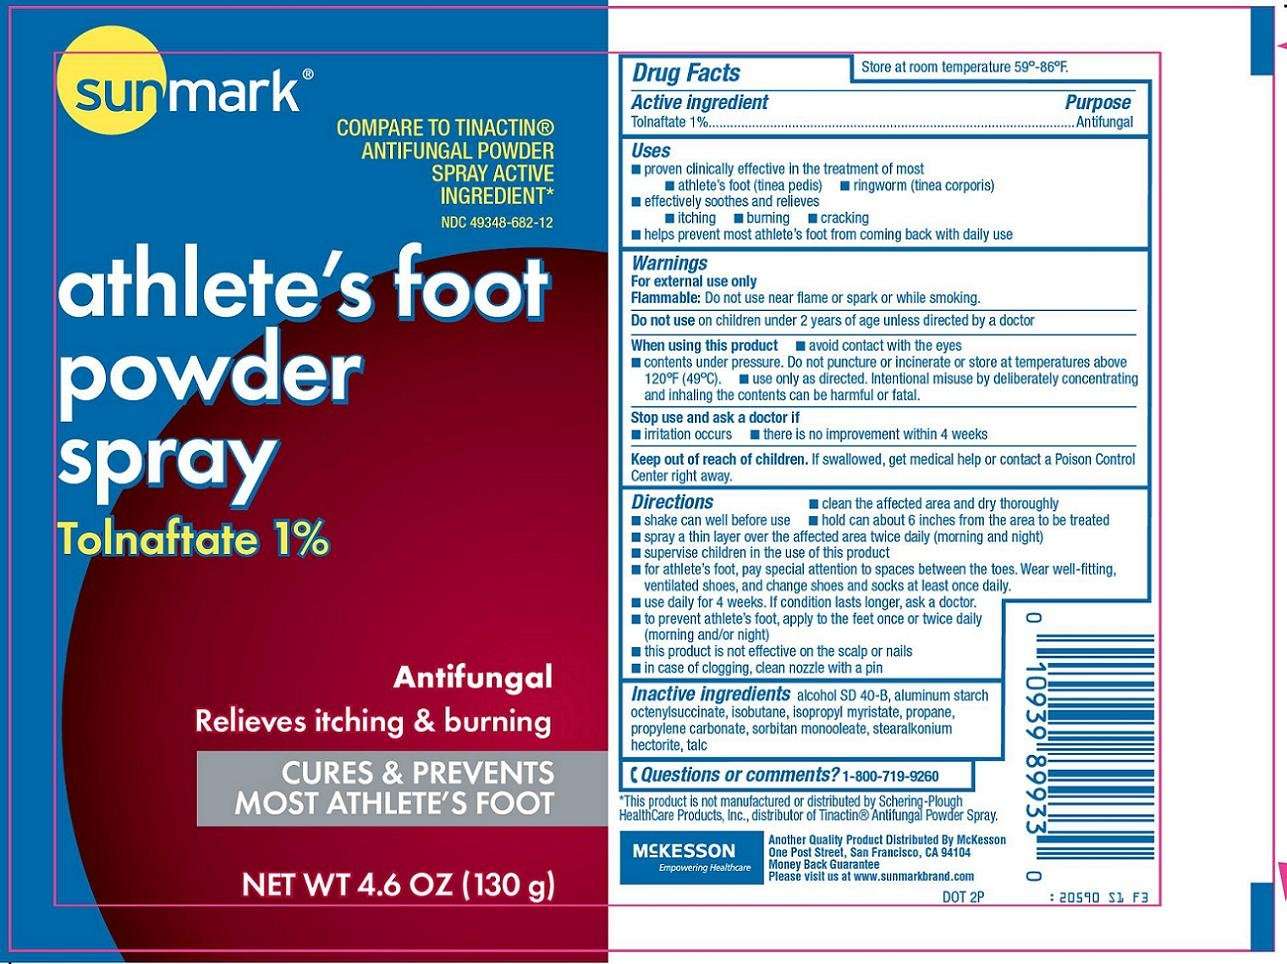 Sunmark athletes foot powder